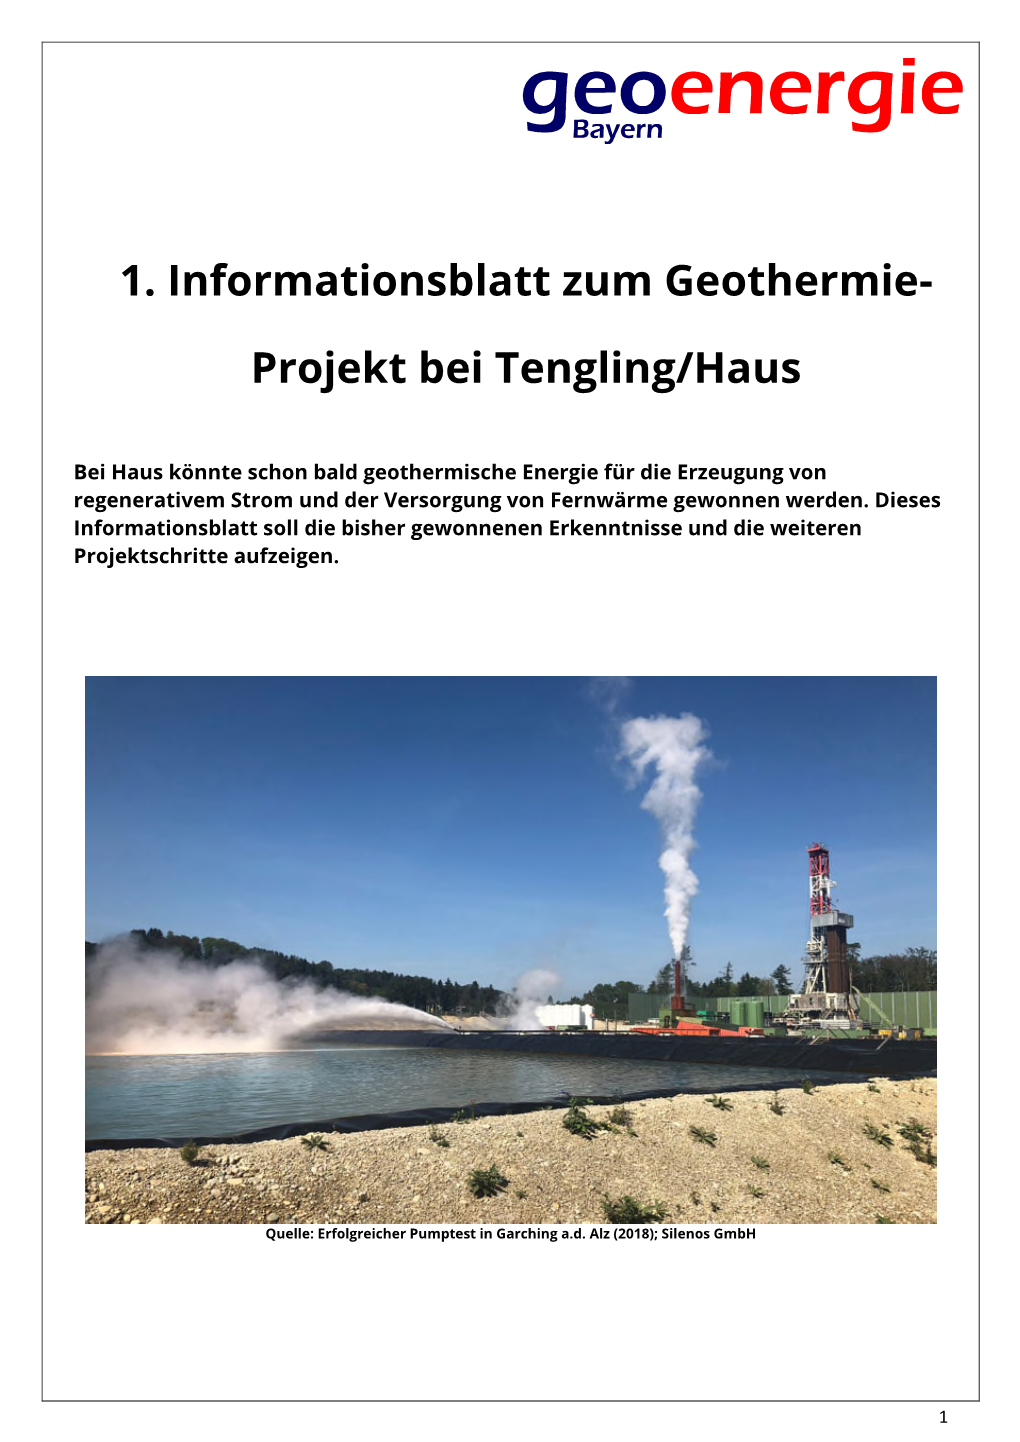 1. Informationsblatt Zum Geothermie- Projekt Bei Tengling/Haus